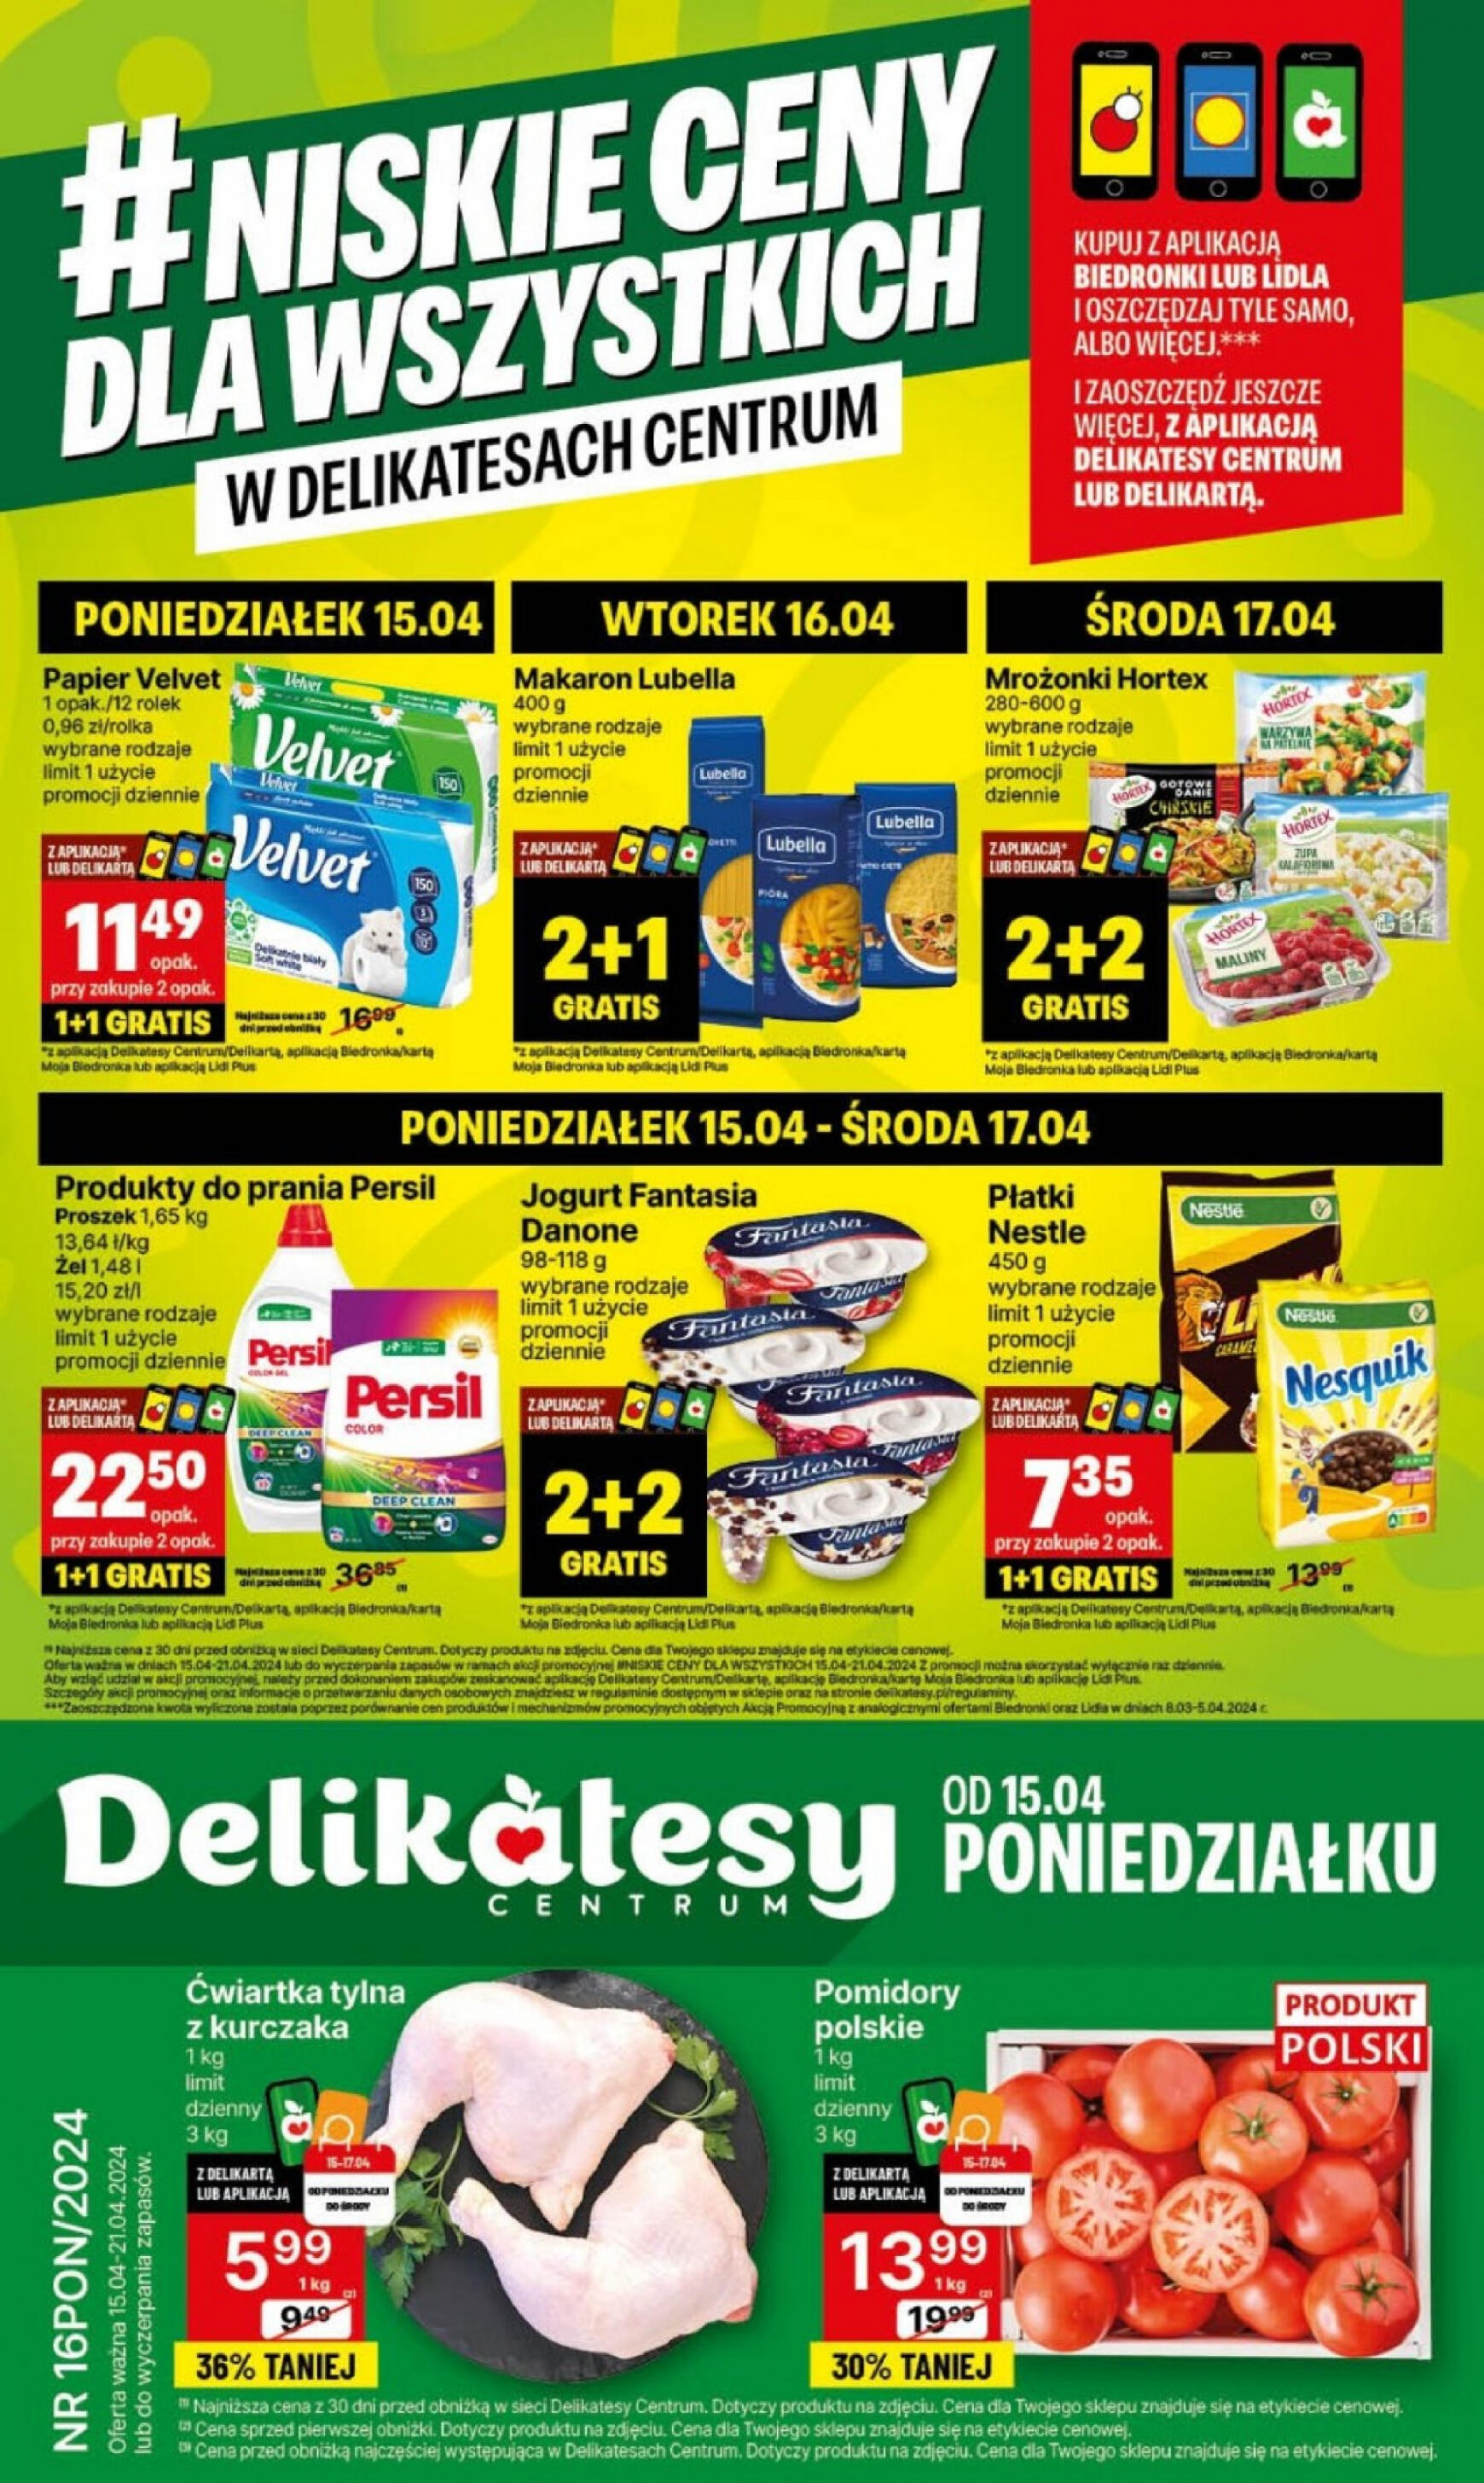 delikatesy-centrum - Delikatesy Centrum gazetka aktualna ważna od 15.04. - 21.04.